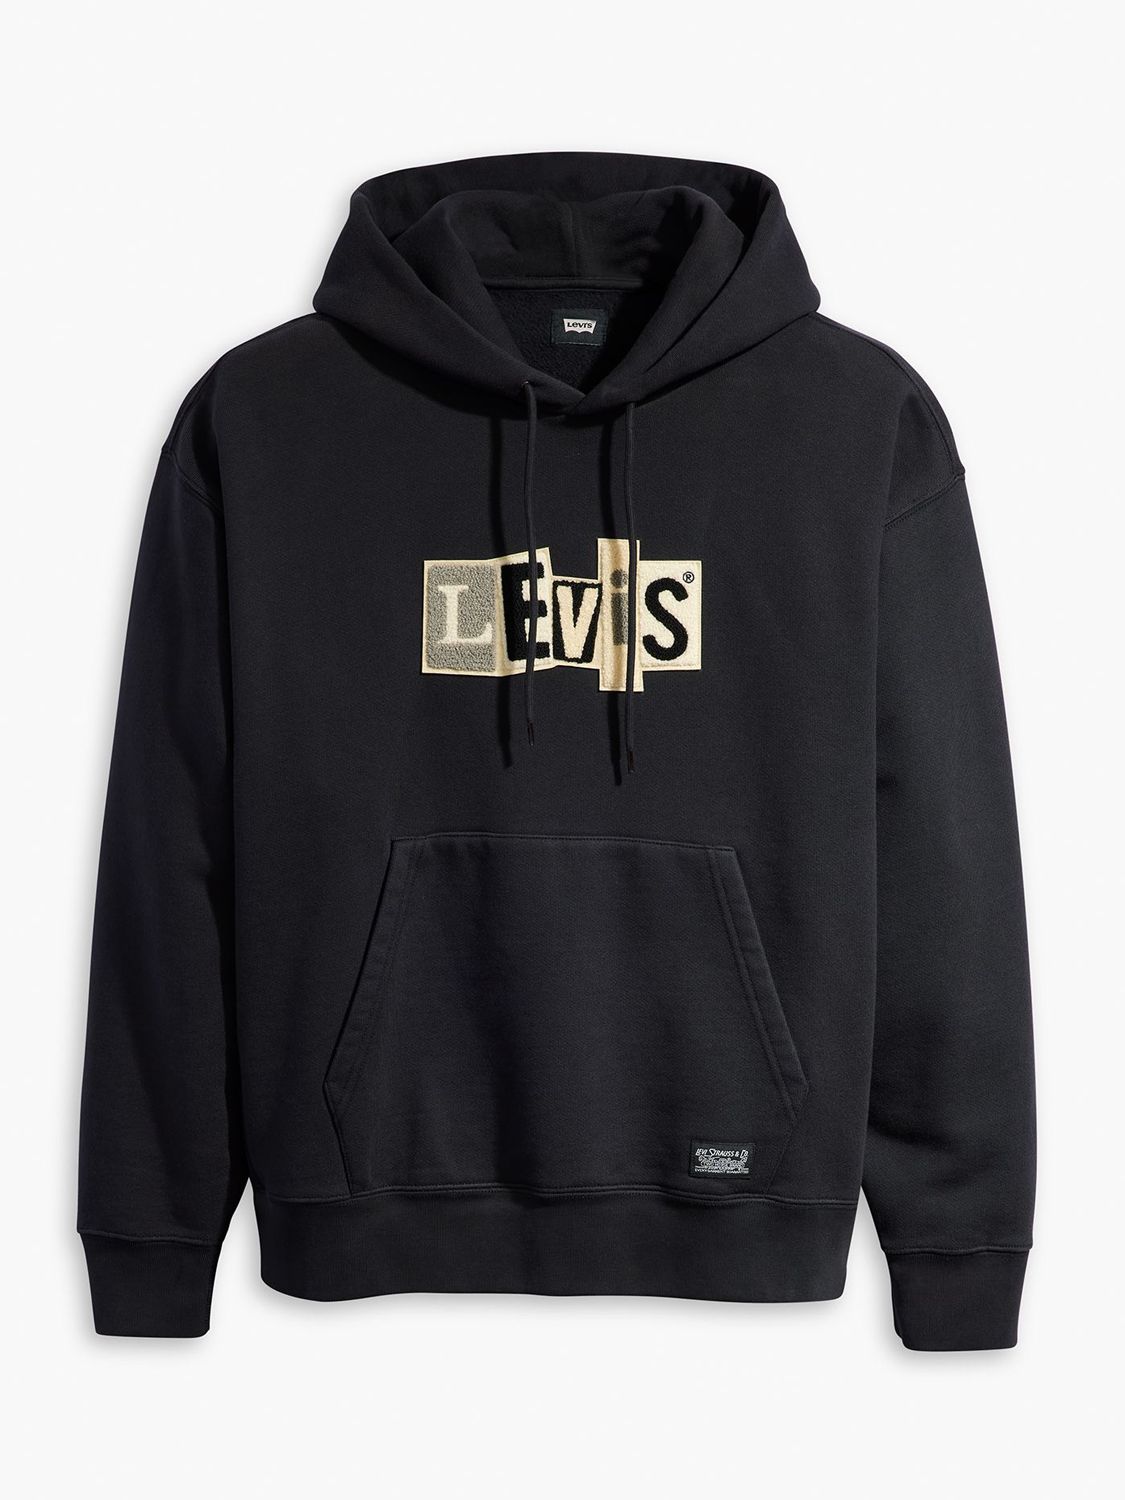 Levi's Skate Hoodie, Black, M